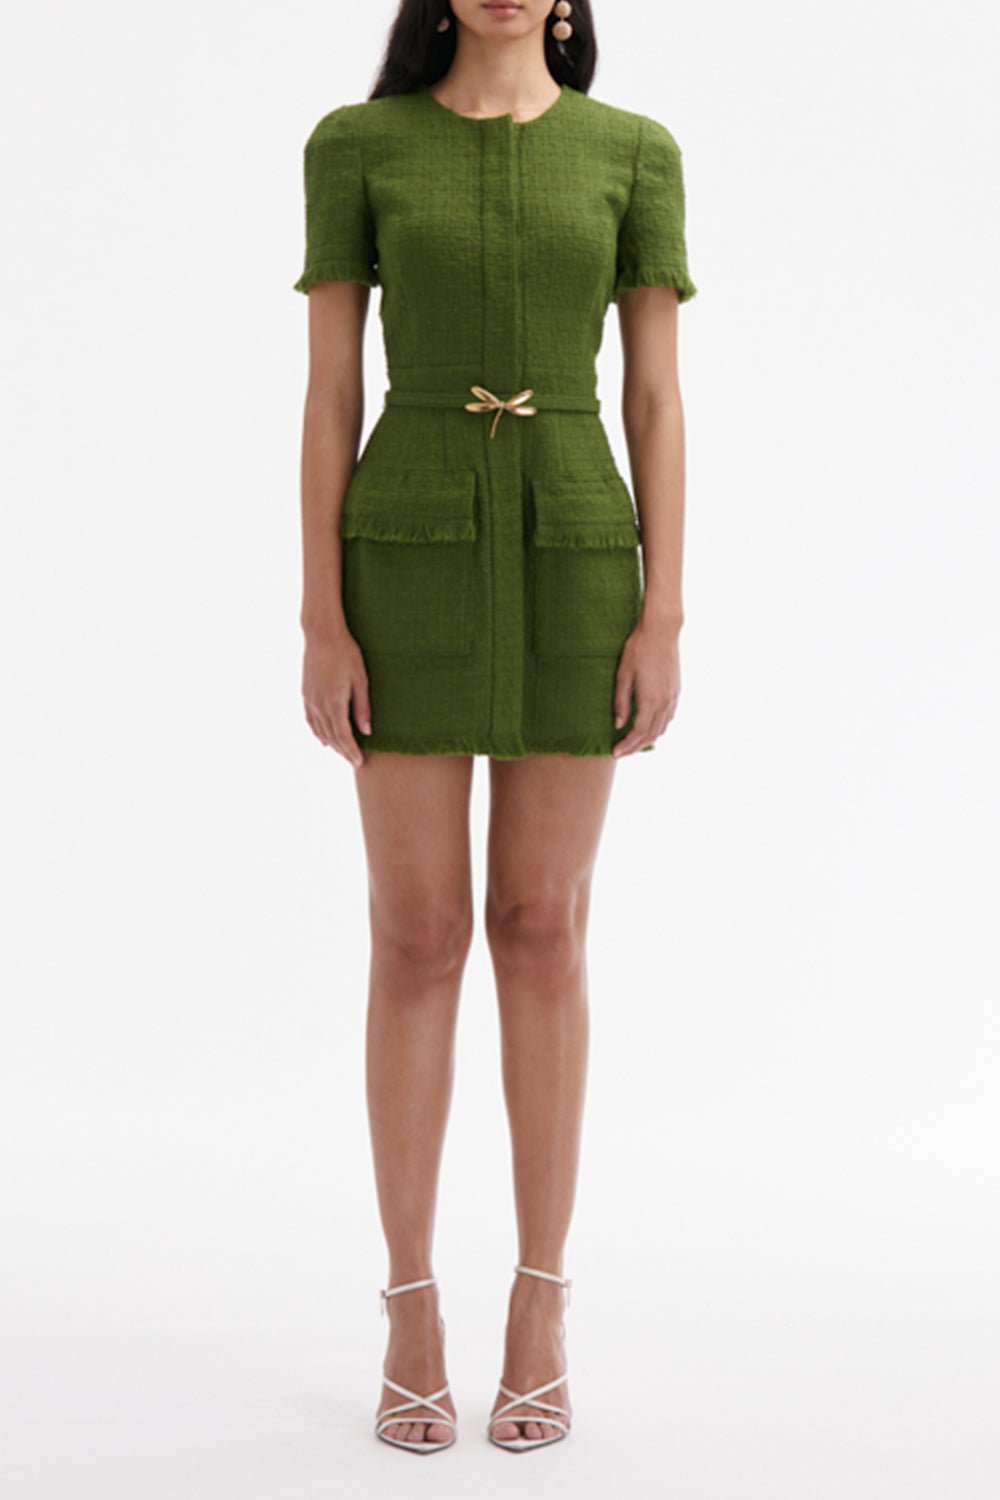 OSCAR DE LA RENTA-Short Sleeve Pocket Dress-